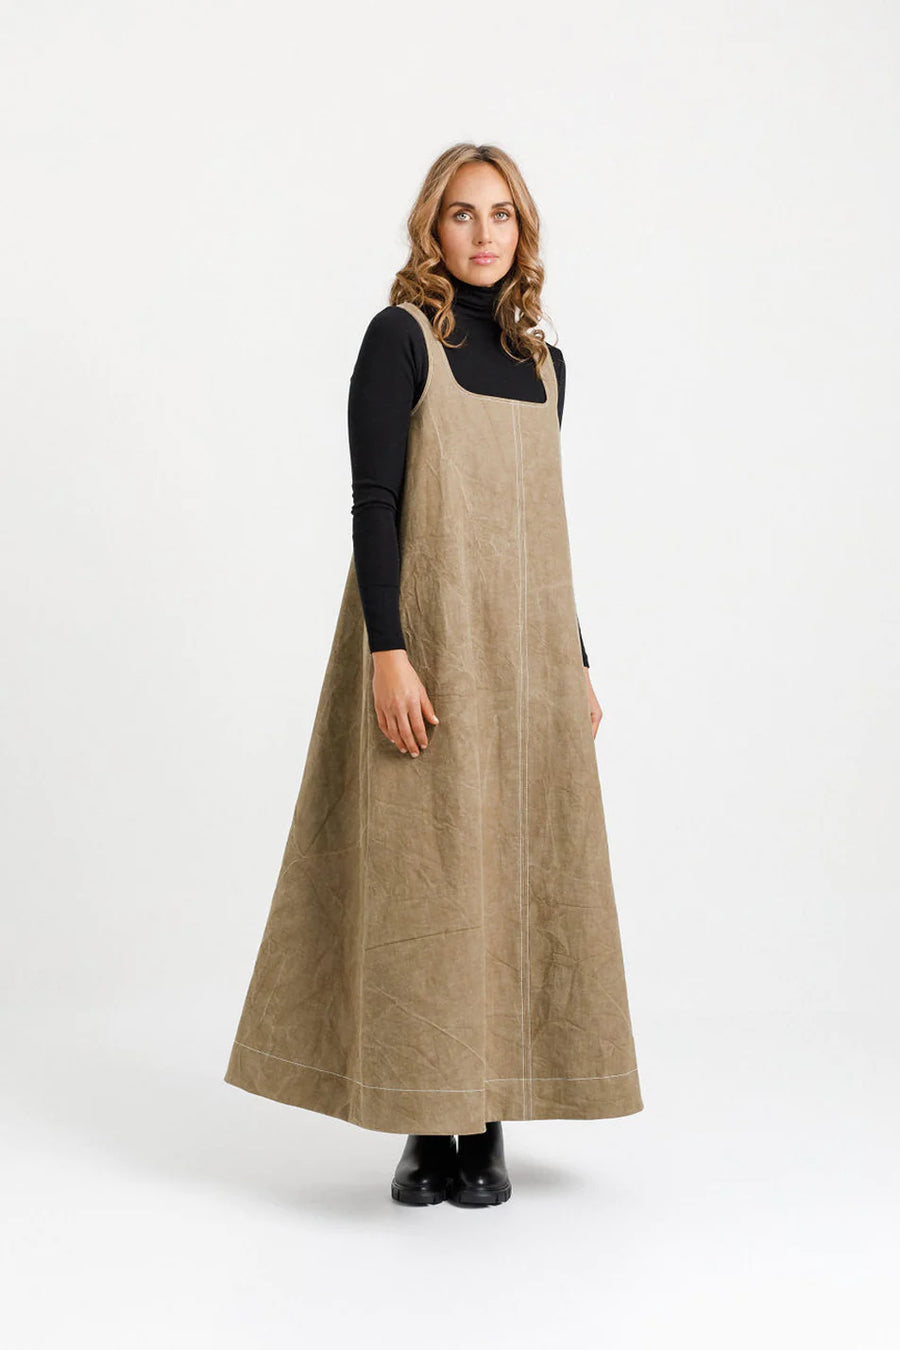 Aalto Dress/Top pattern- Papercuts